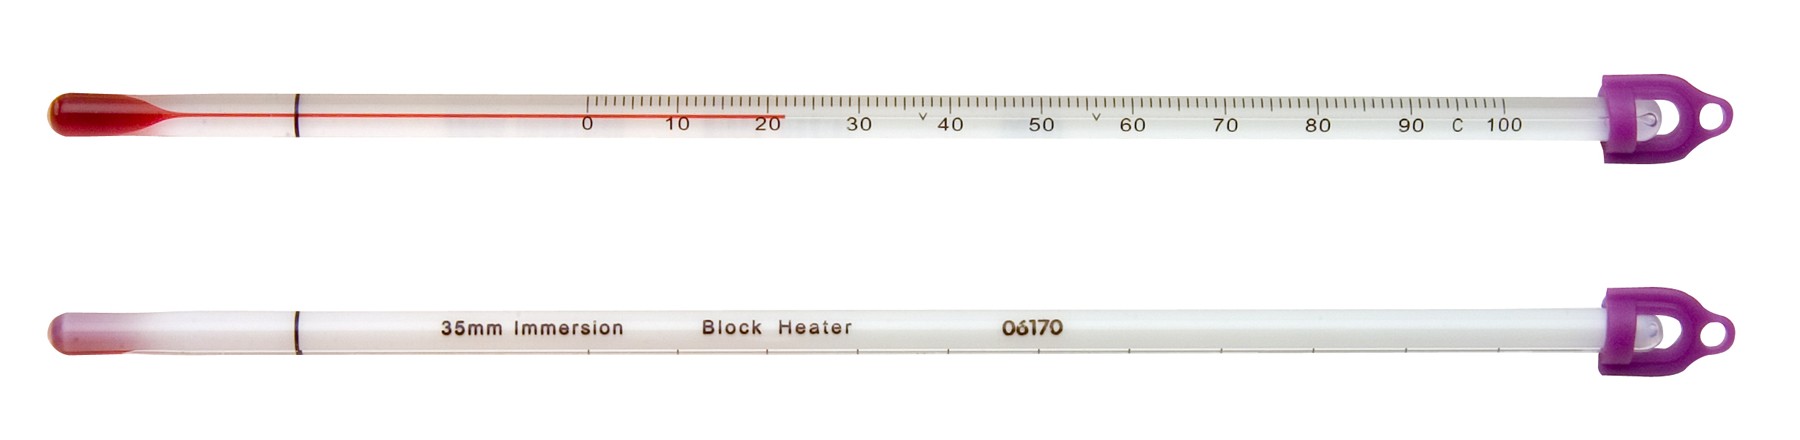 SP Bel-Art, SP Bel-Art, H-B DURAC Hot Water/Refrigerant Line  Liquid-In-Glass Angled Thermometer; 5 to 120C (40 to 260F), Steel Well,  Organic Liquid Fill